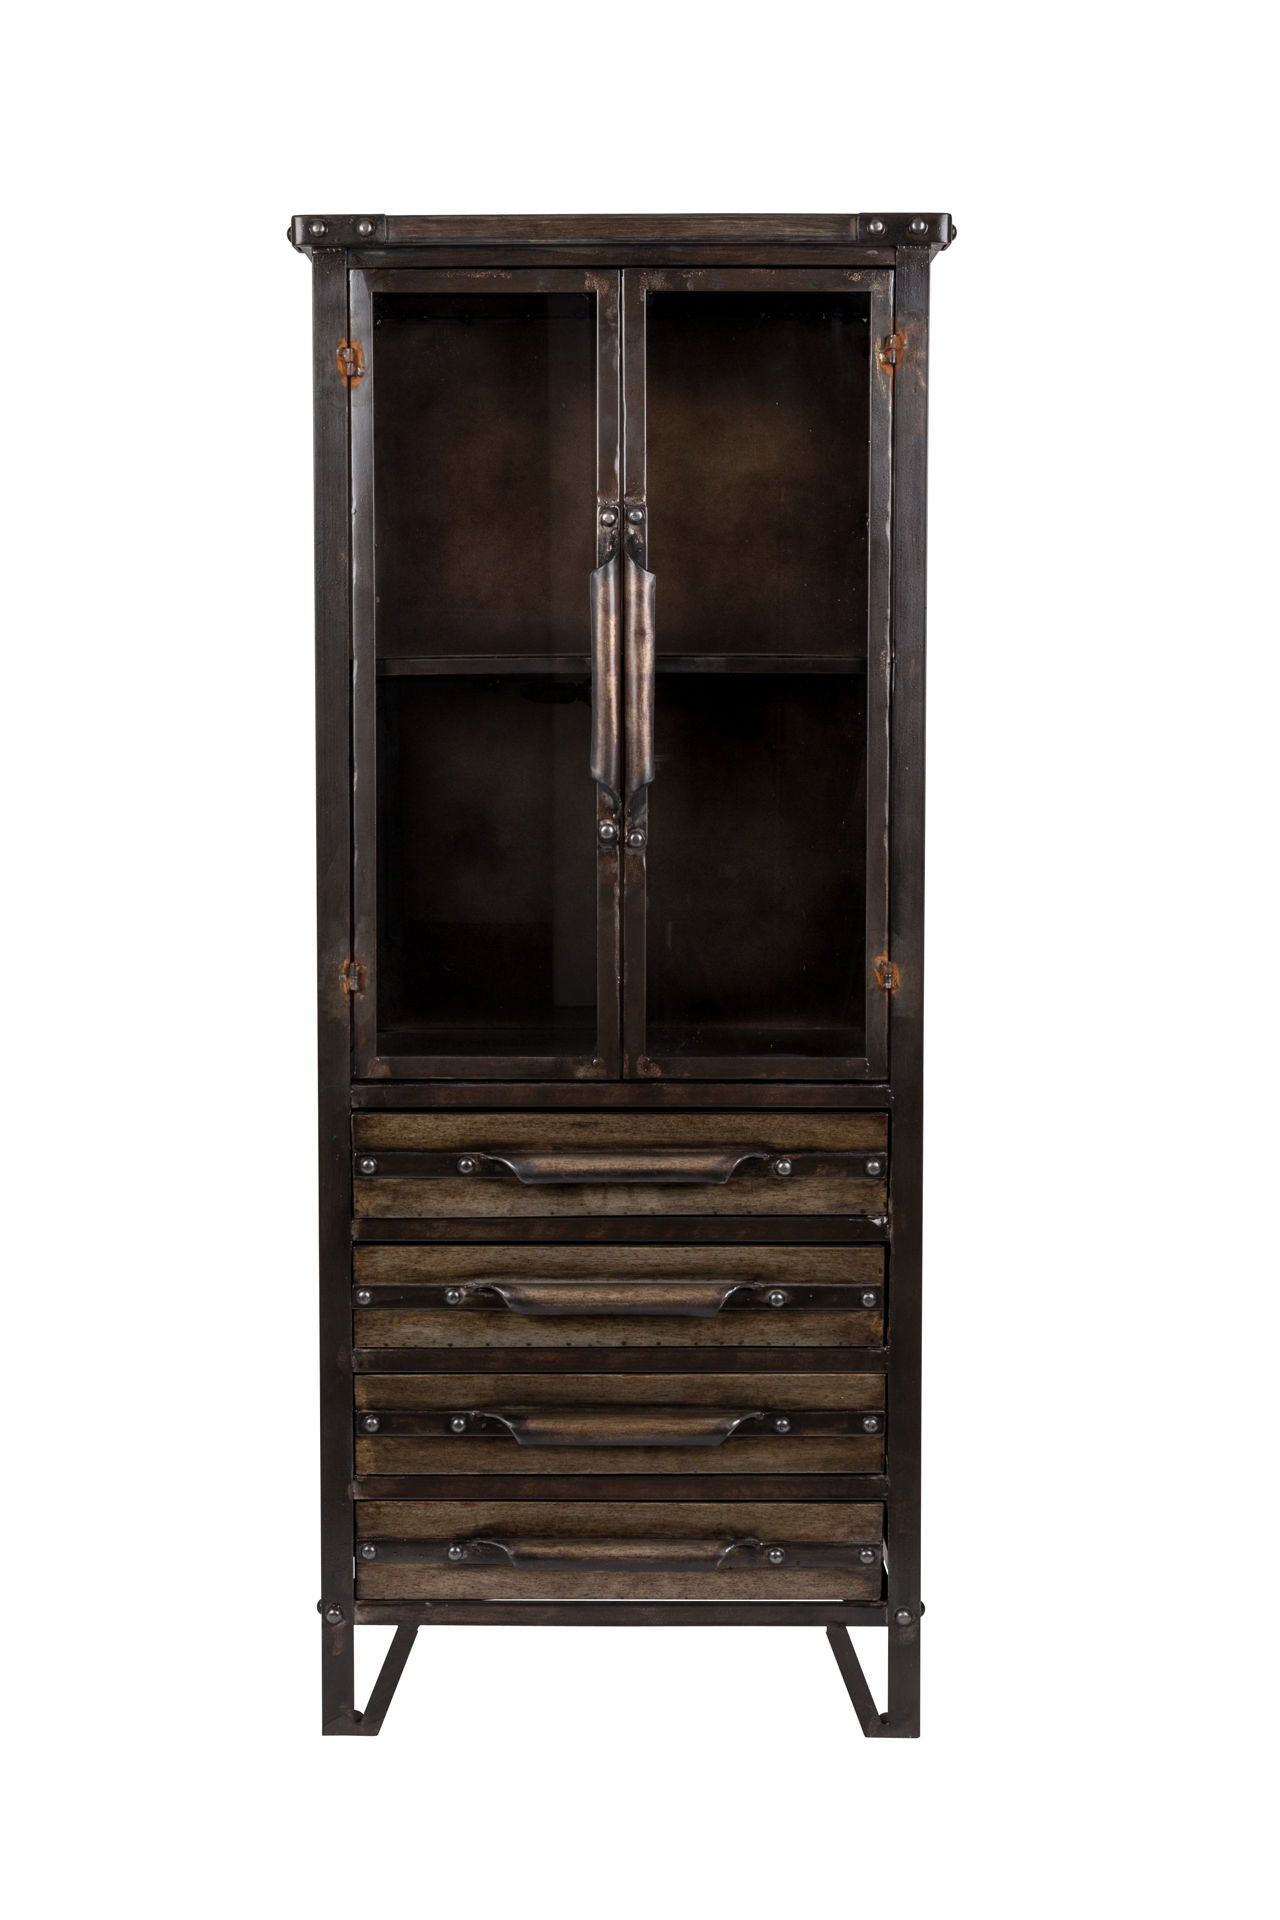 Nancy's Archdale Cabinet - Industrial - Black, Metal, Brown - Iron, Glass - 34.5 cm x 49 cm x 35 cm